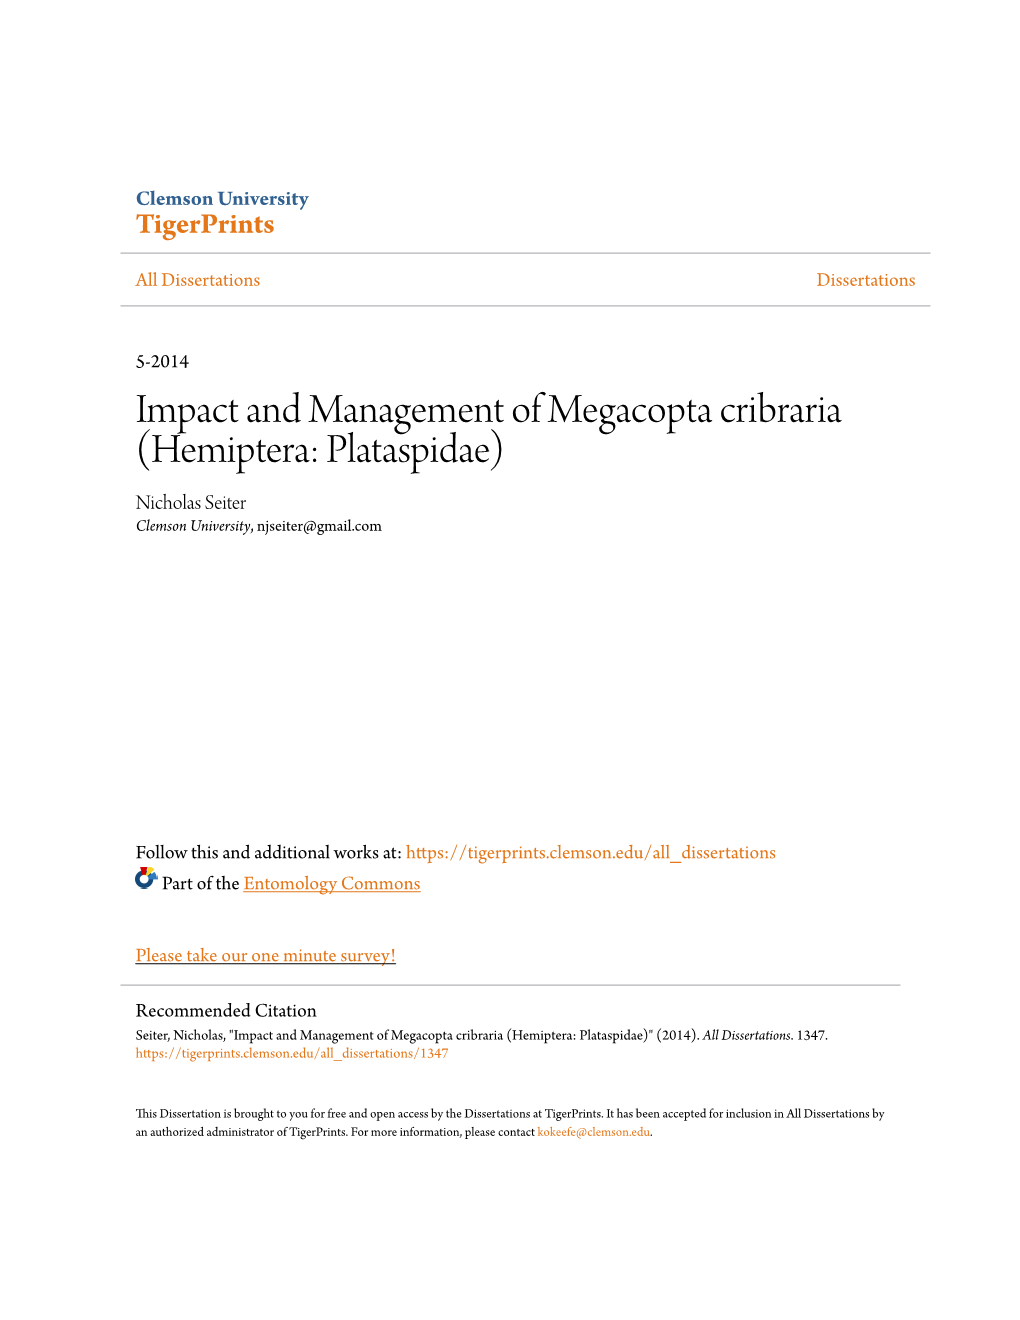 Impact and Management of Megacopta Cribraria (Hemiptera: Plataspidae) Nicholas Seiter Clemson University, Njseiter@Gmail.Com